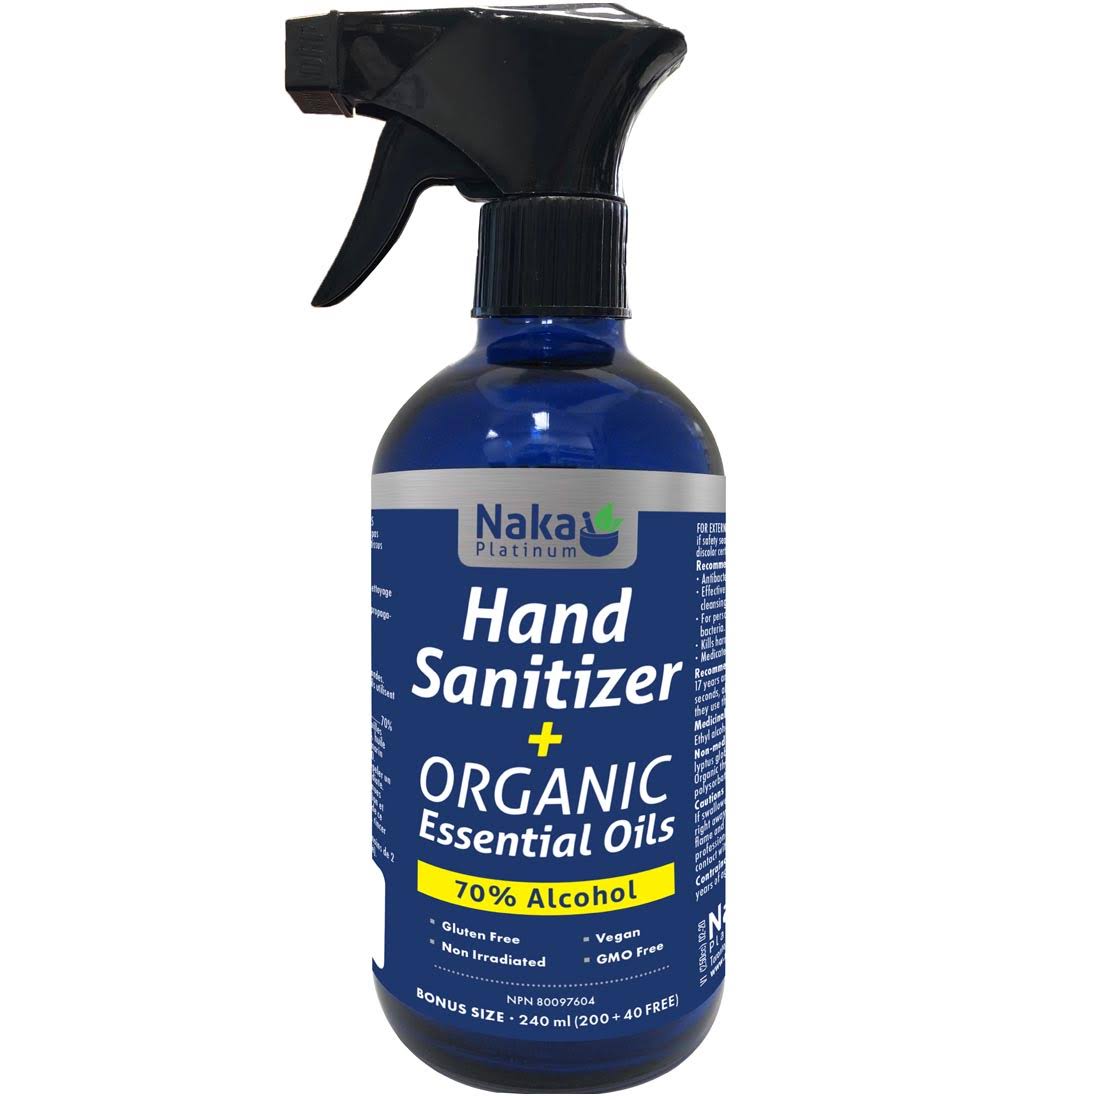 Hand Sanitizer + Organic Essential Oil (70% Alcohol) Family Size – 240ml + Bonus Item!